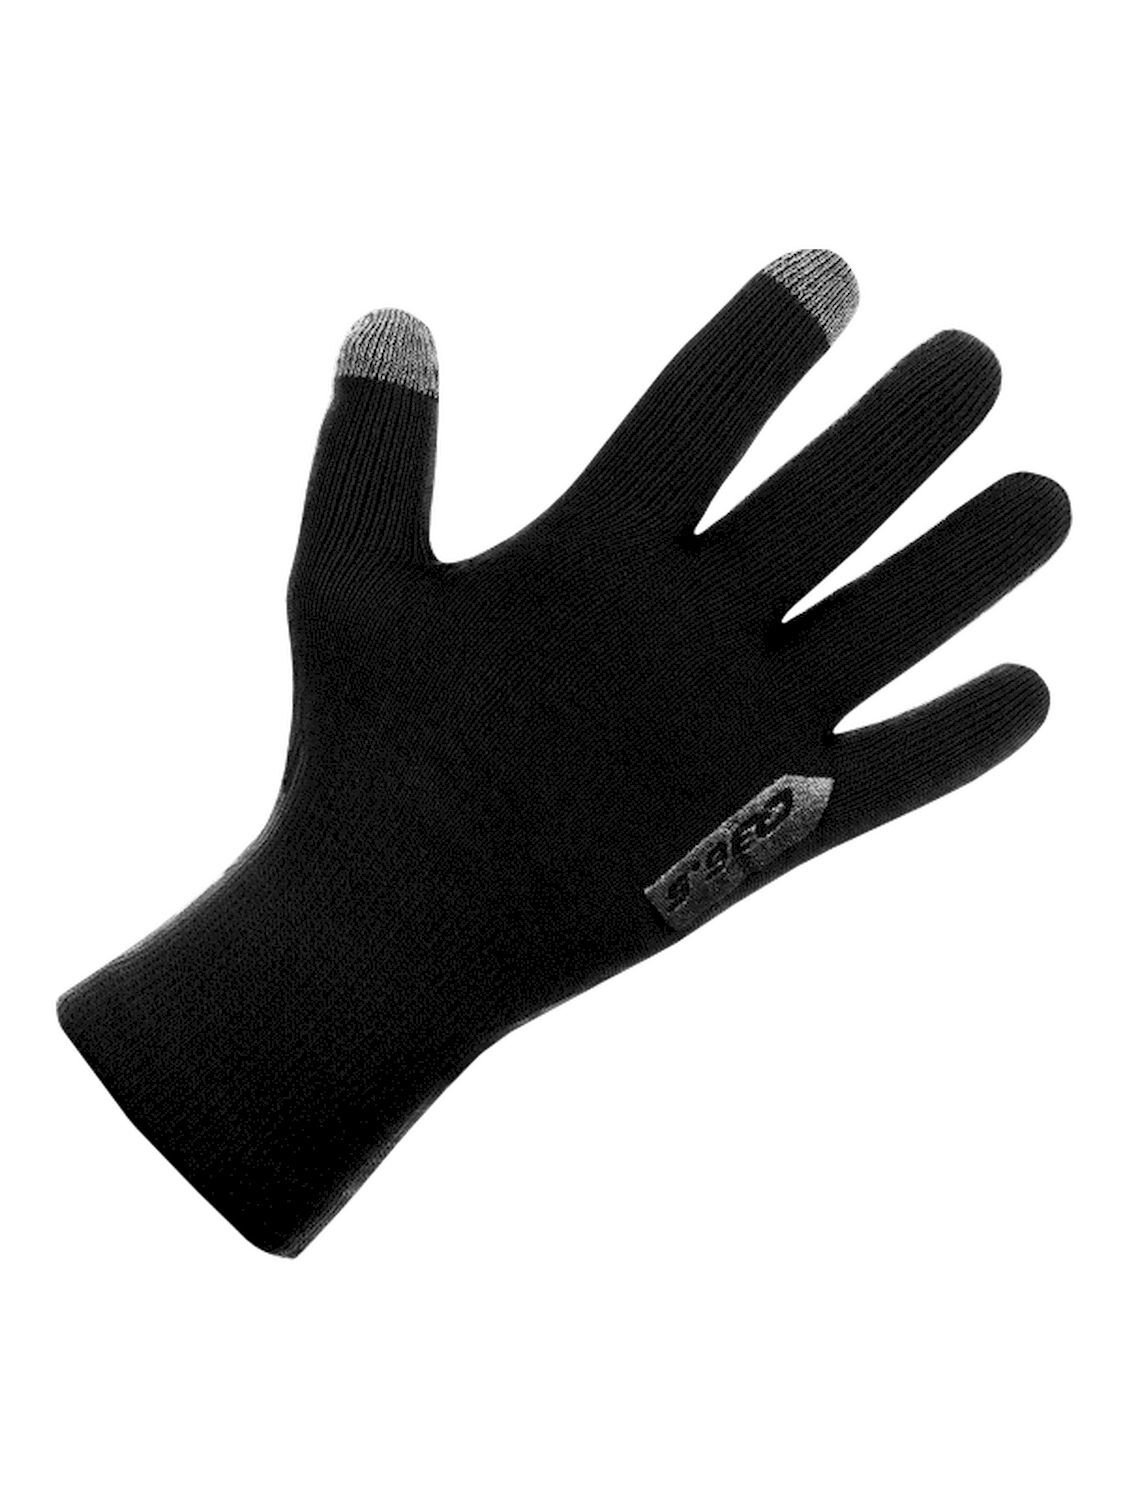 Q36.5 Anfibio - Cycling gloves - Men's